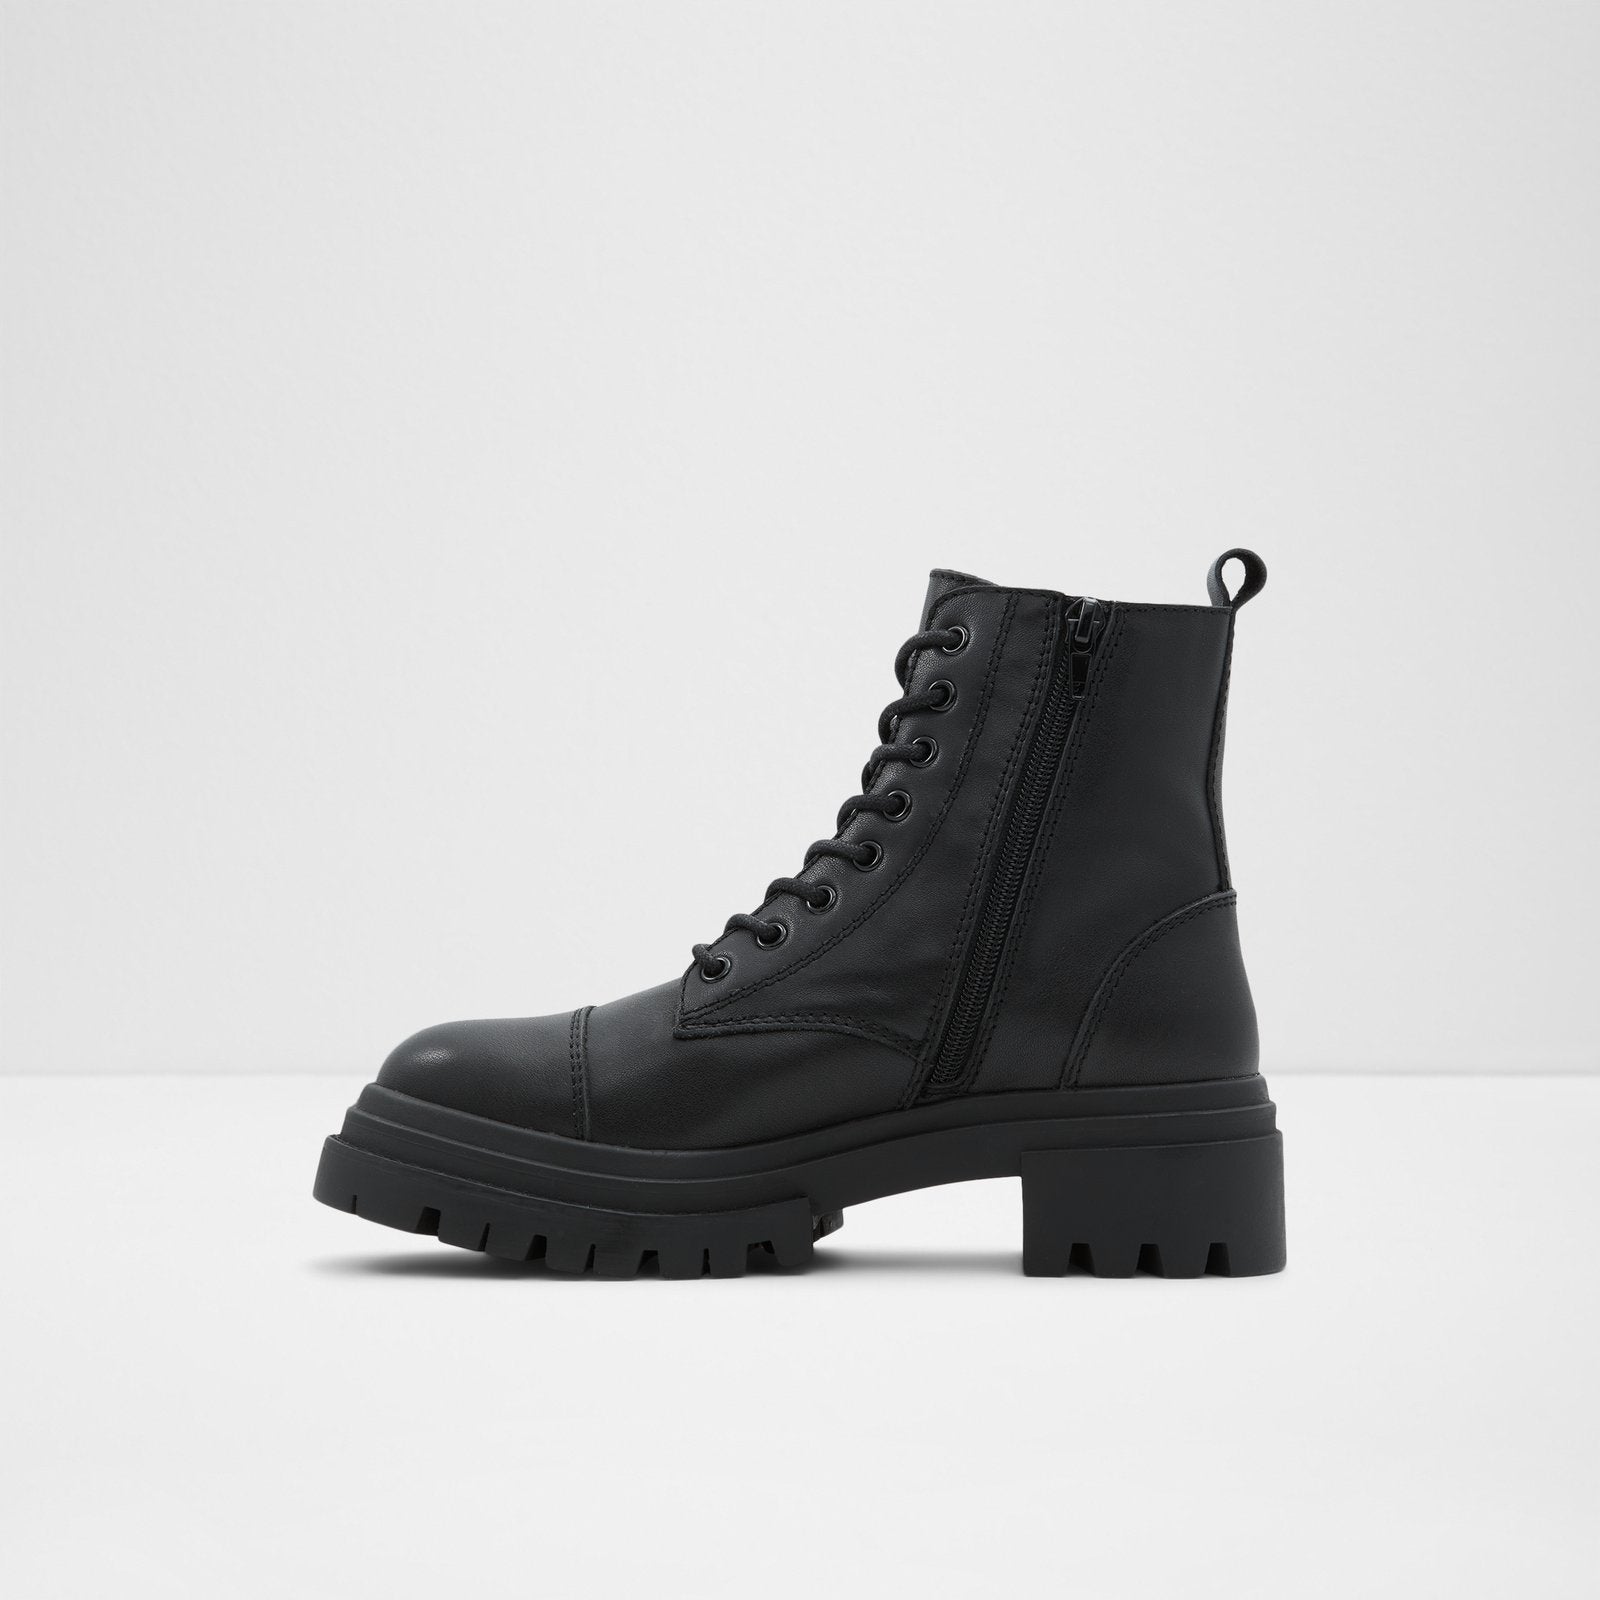 Aldo Women's Ankle Boots Bigmark (Black) ALDO